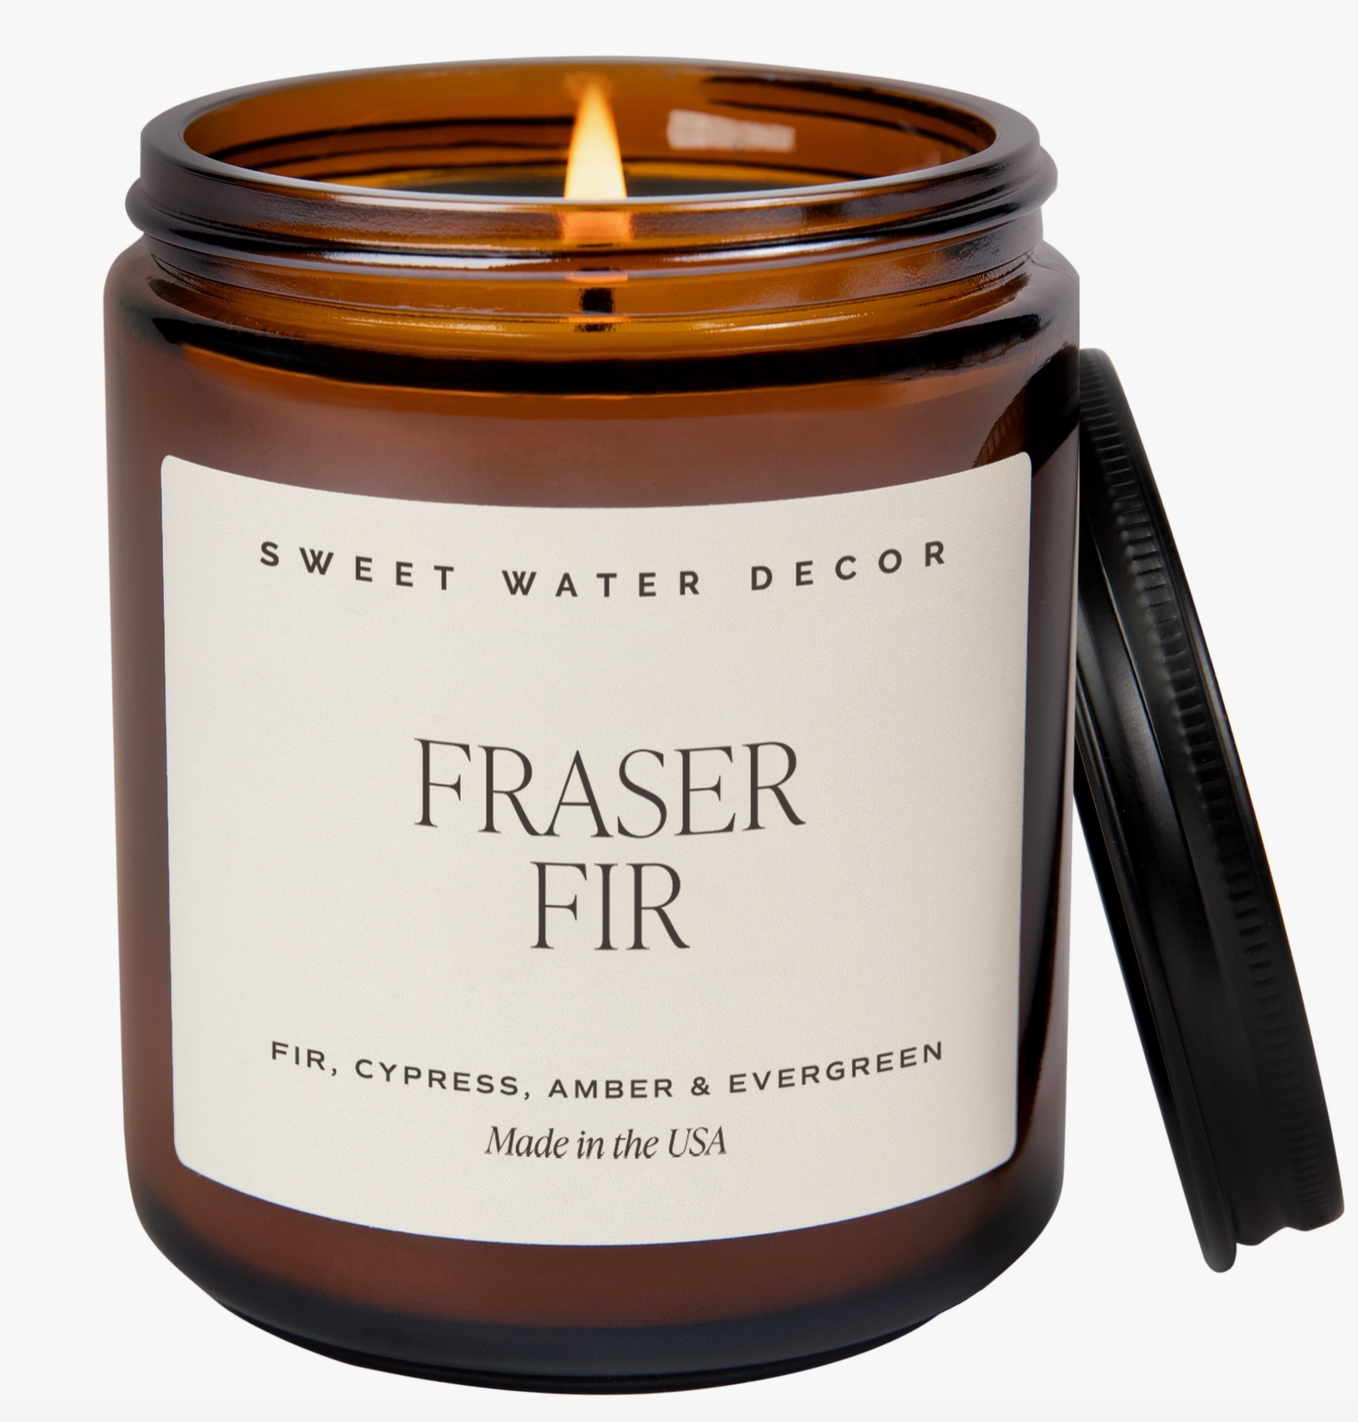 Fraser Fir 9 oz Soy Candle